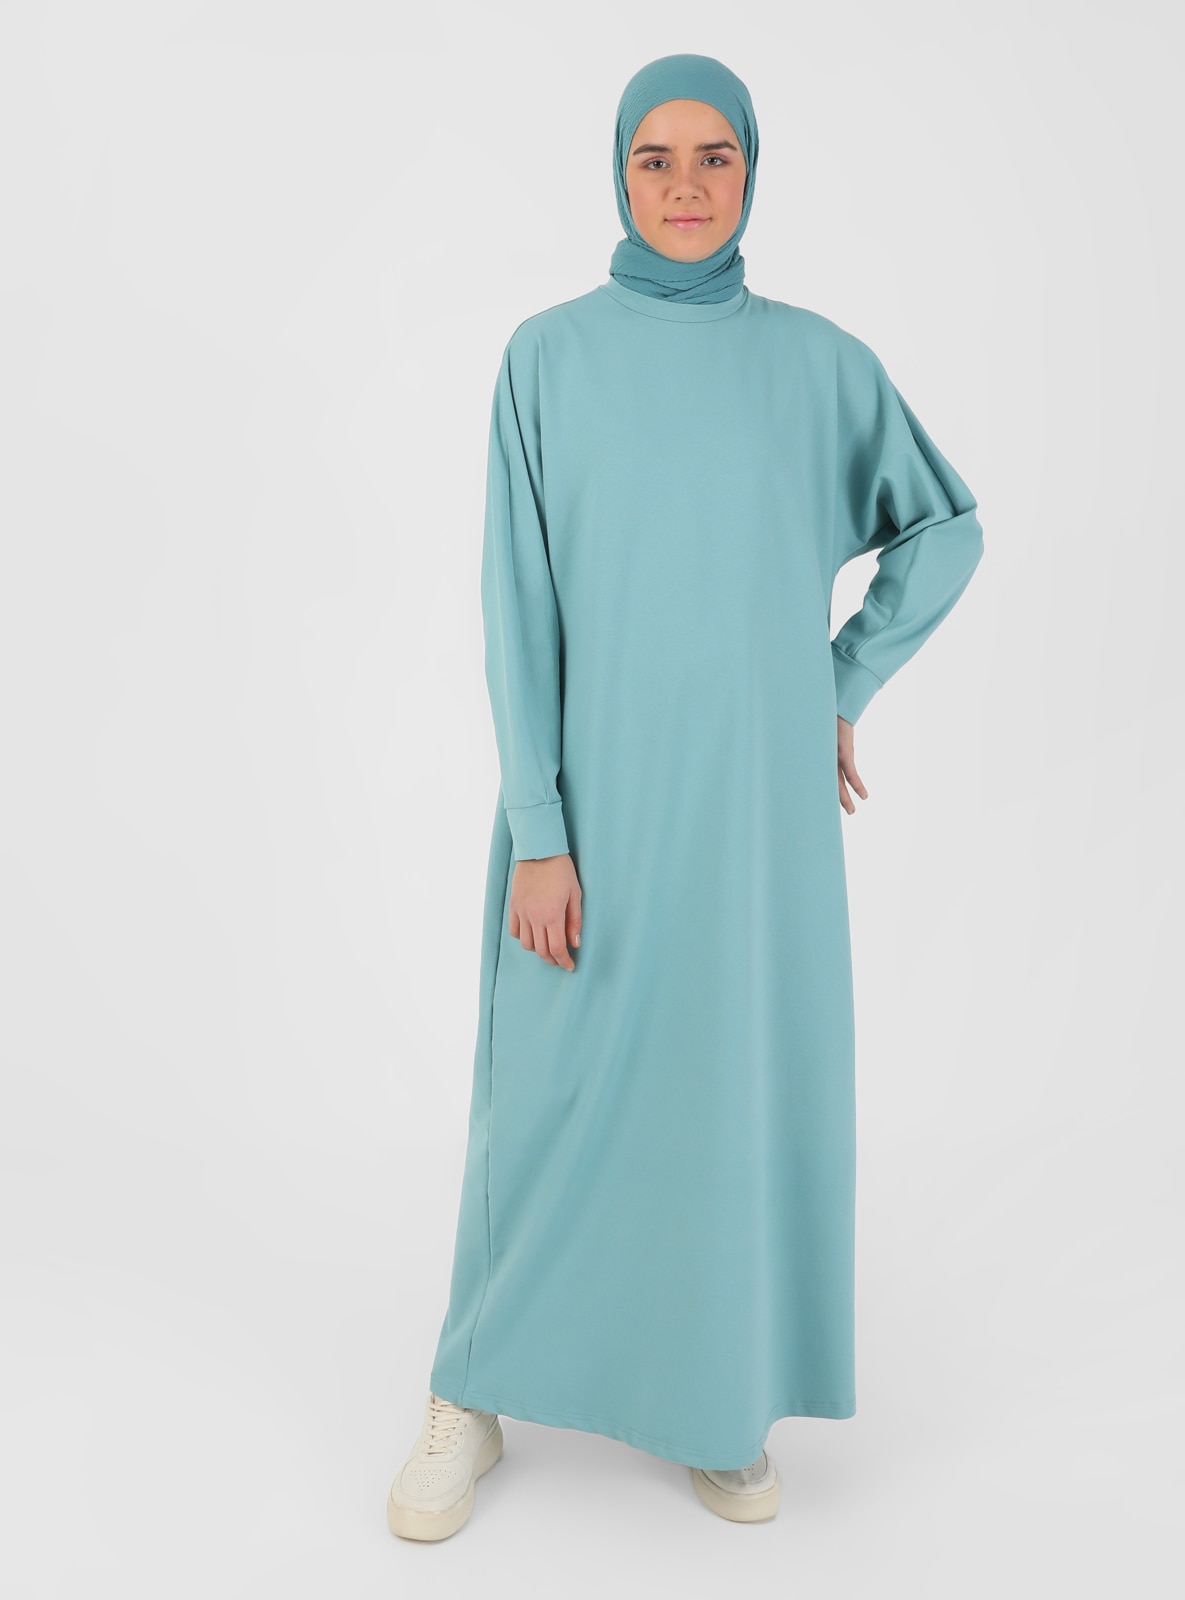 Nile Green - Crew neck - Unlined - Modest Dress